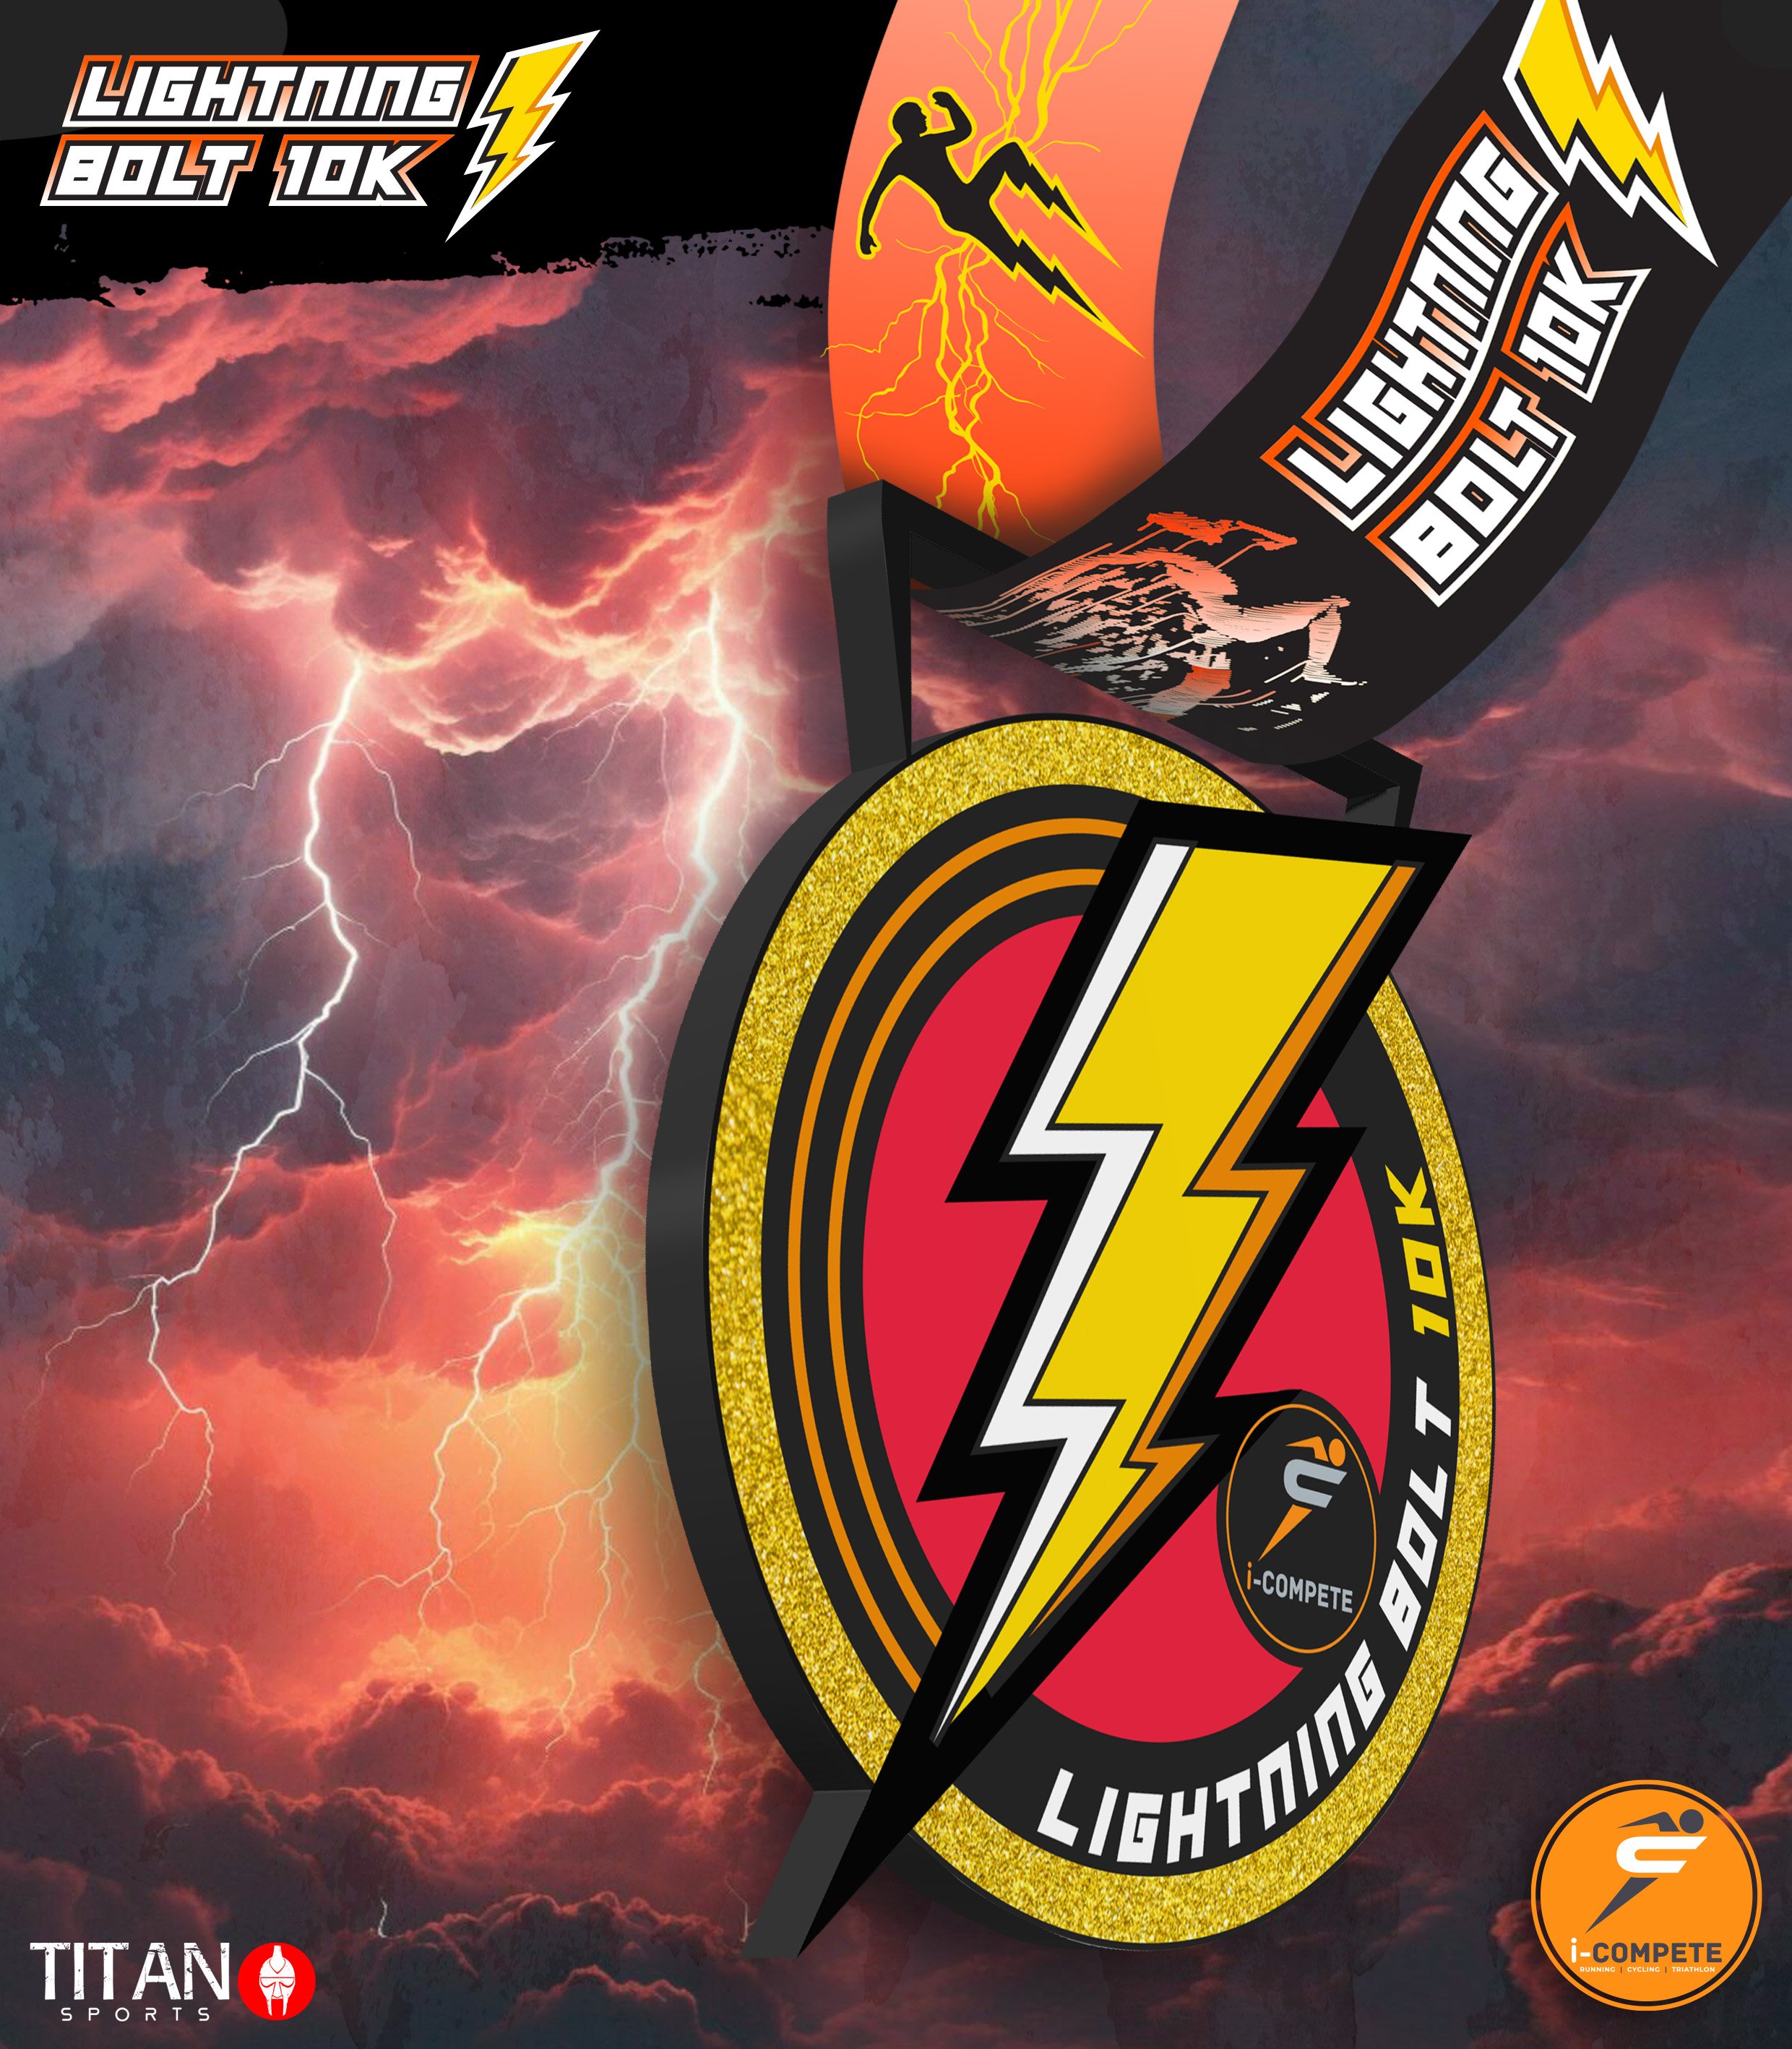 Lightning Bolt Promo Image.jpg